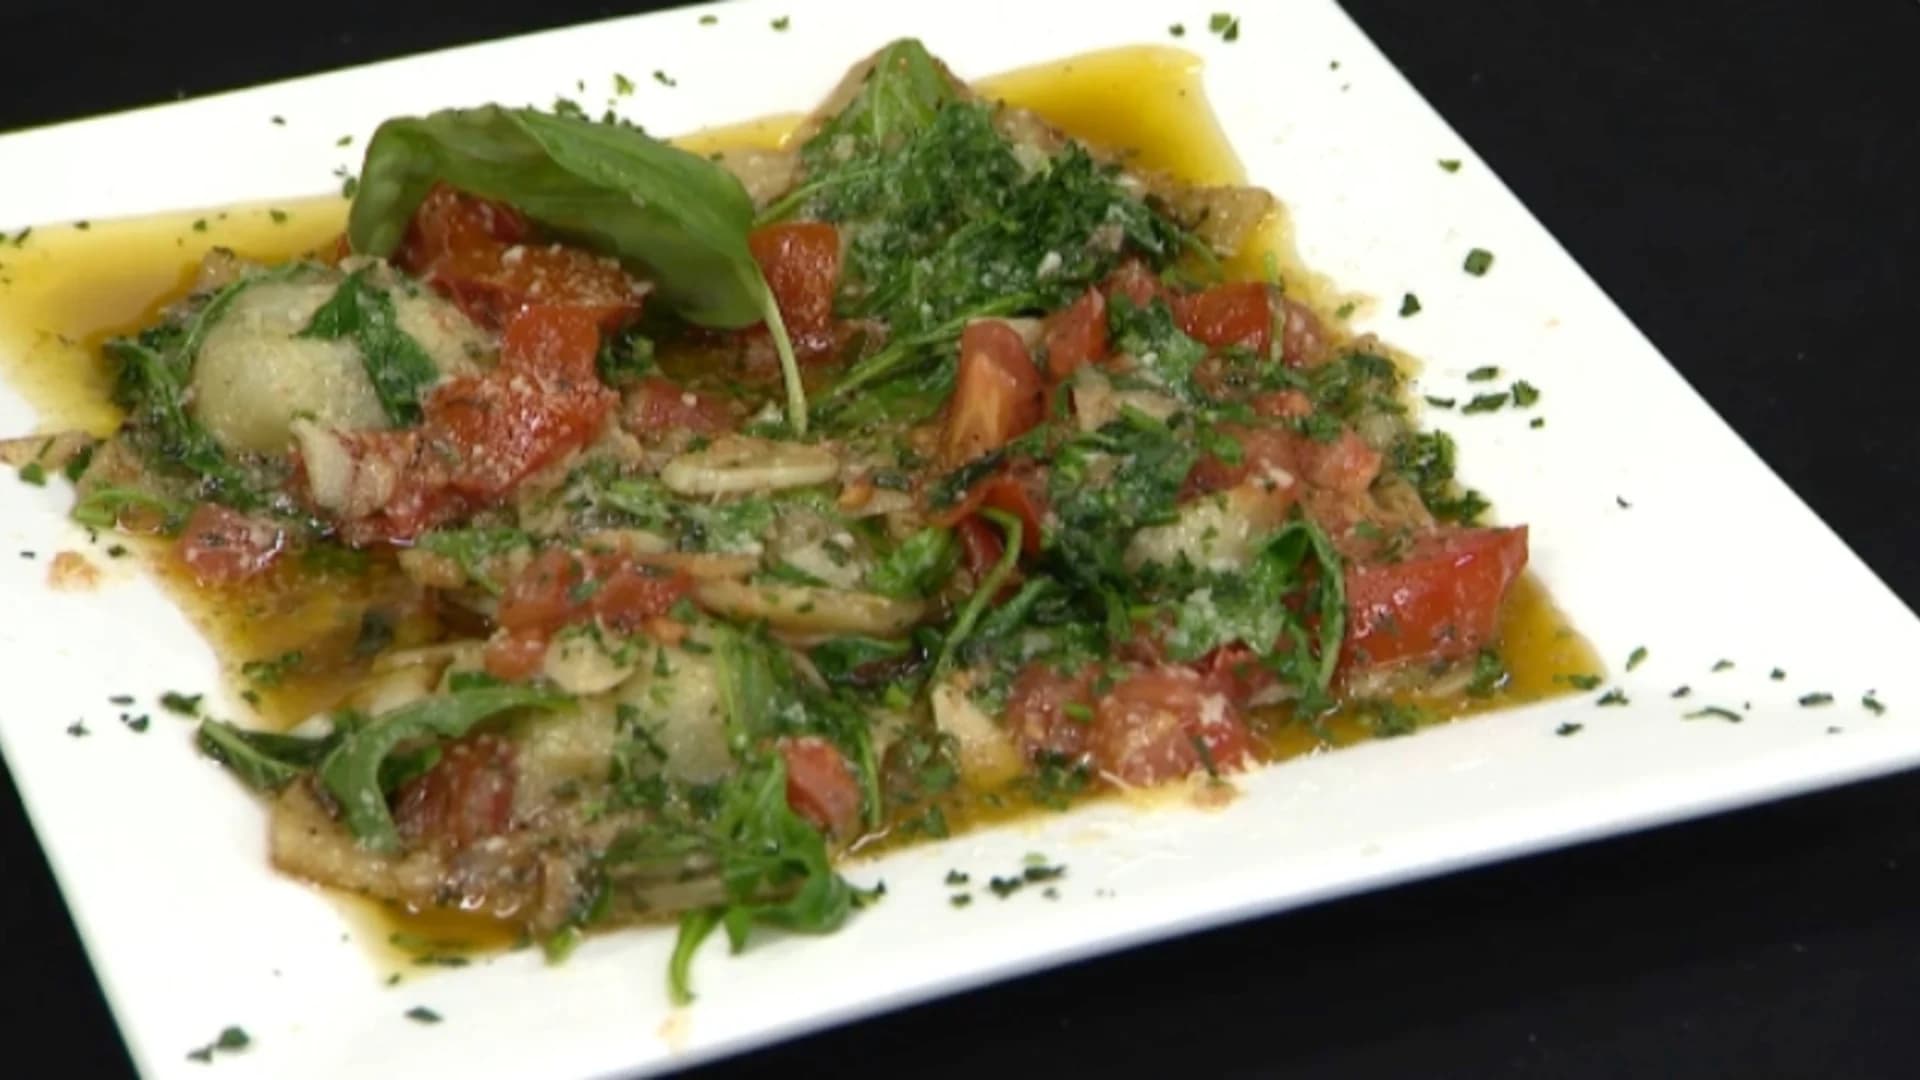 What's Cooking: Sausage ravioli and broccoli rabe